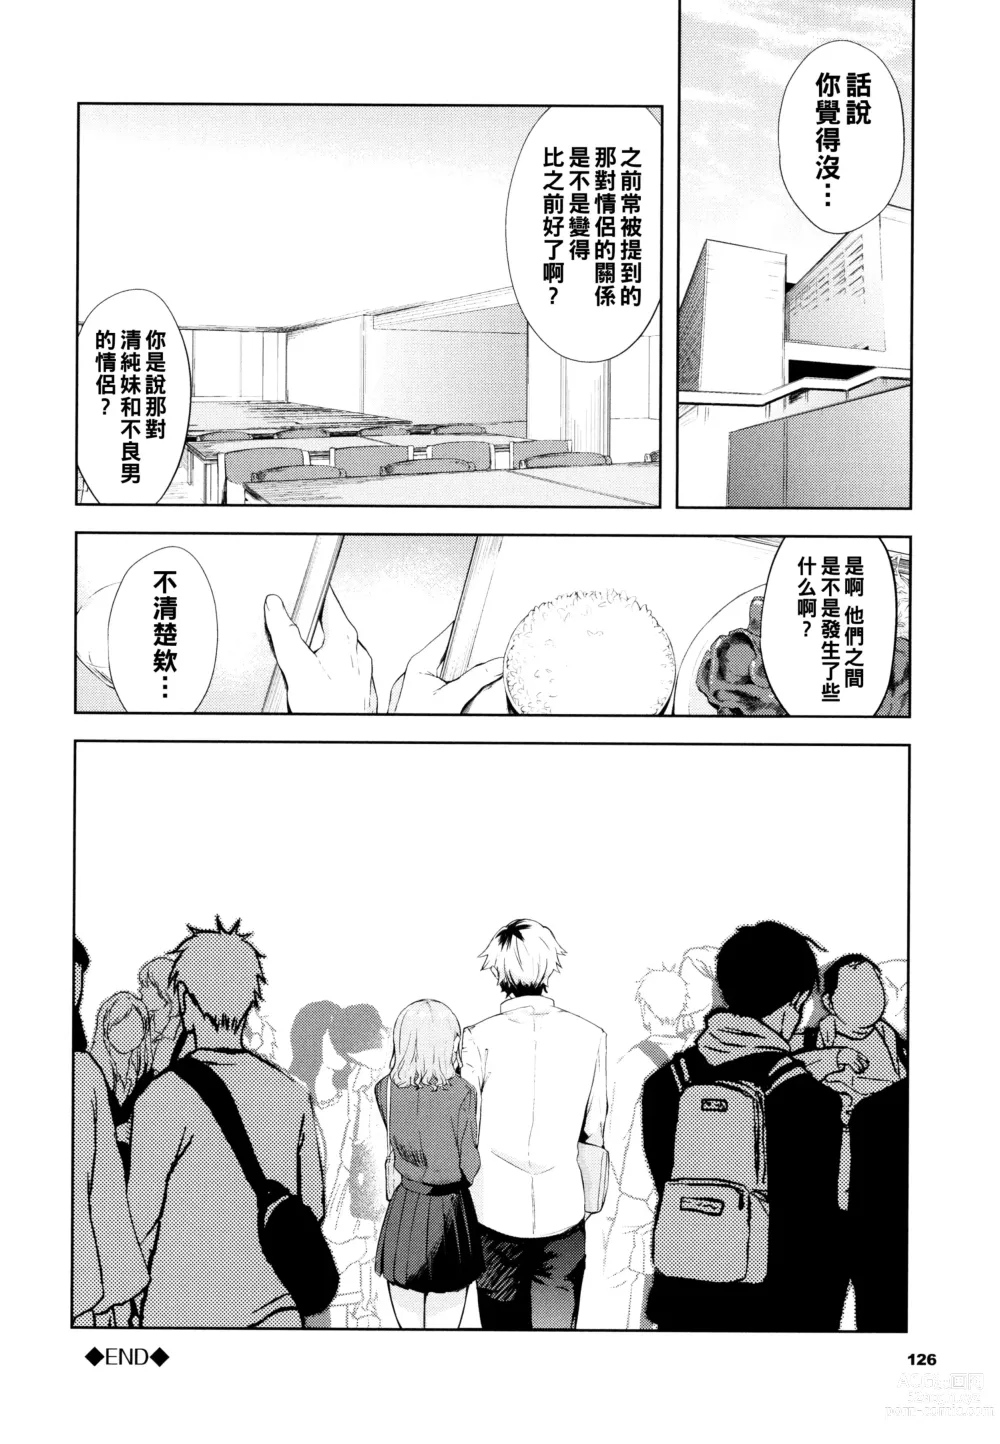 Page 20 of manga Mekakushi